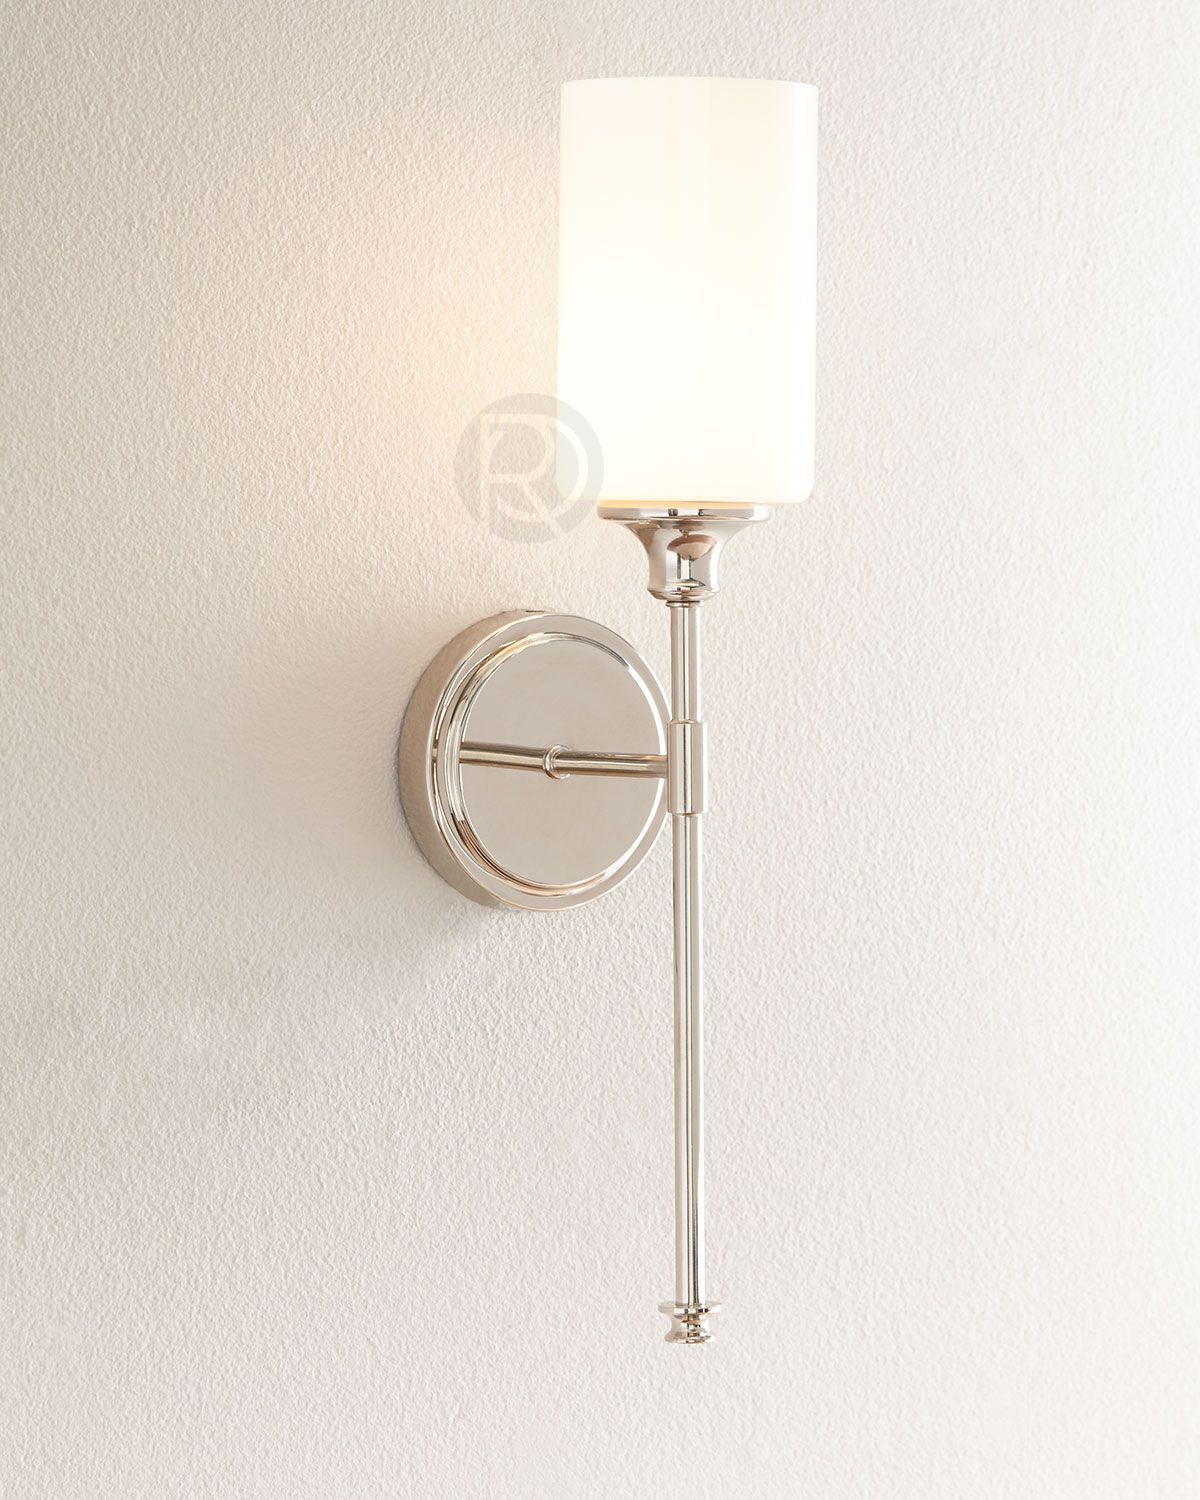 Designer wall lamp (Sconce) CELESTE by Romatti